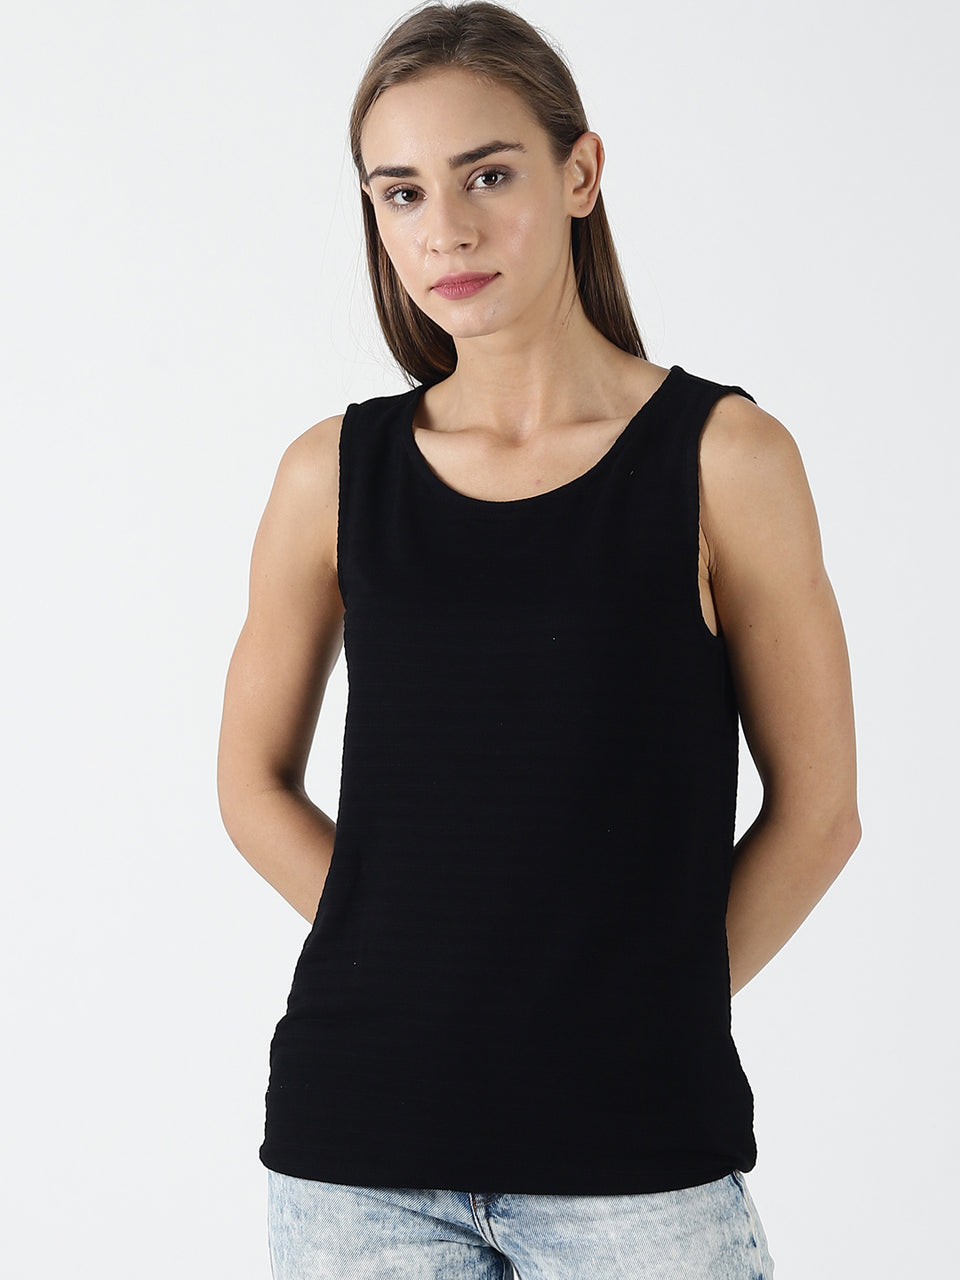 women solid black sleeveless tank tops 